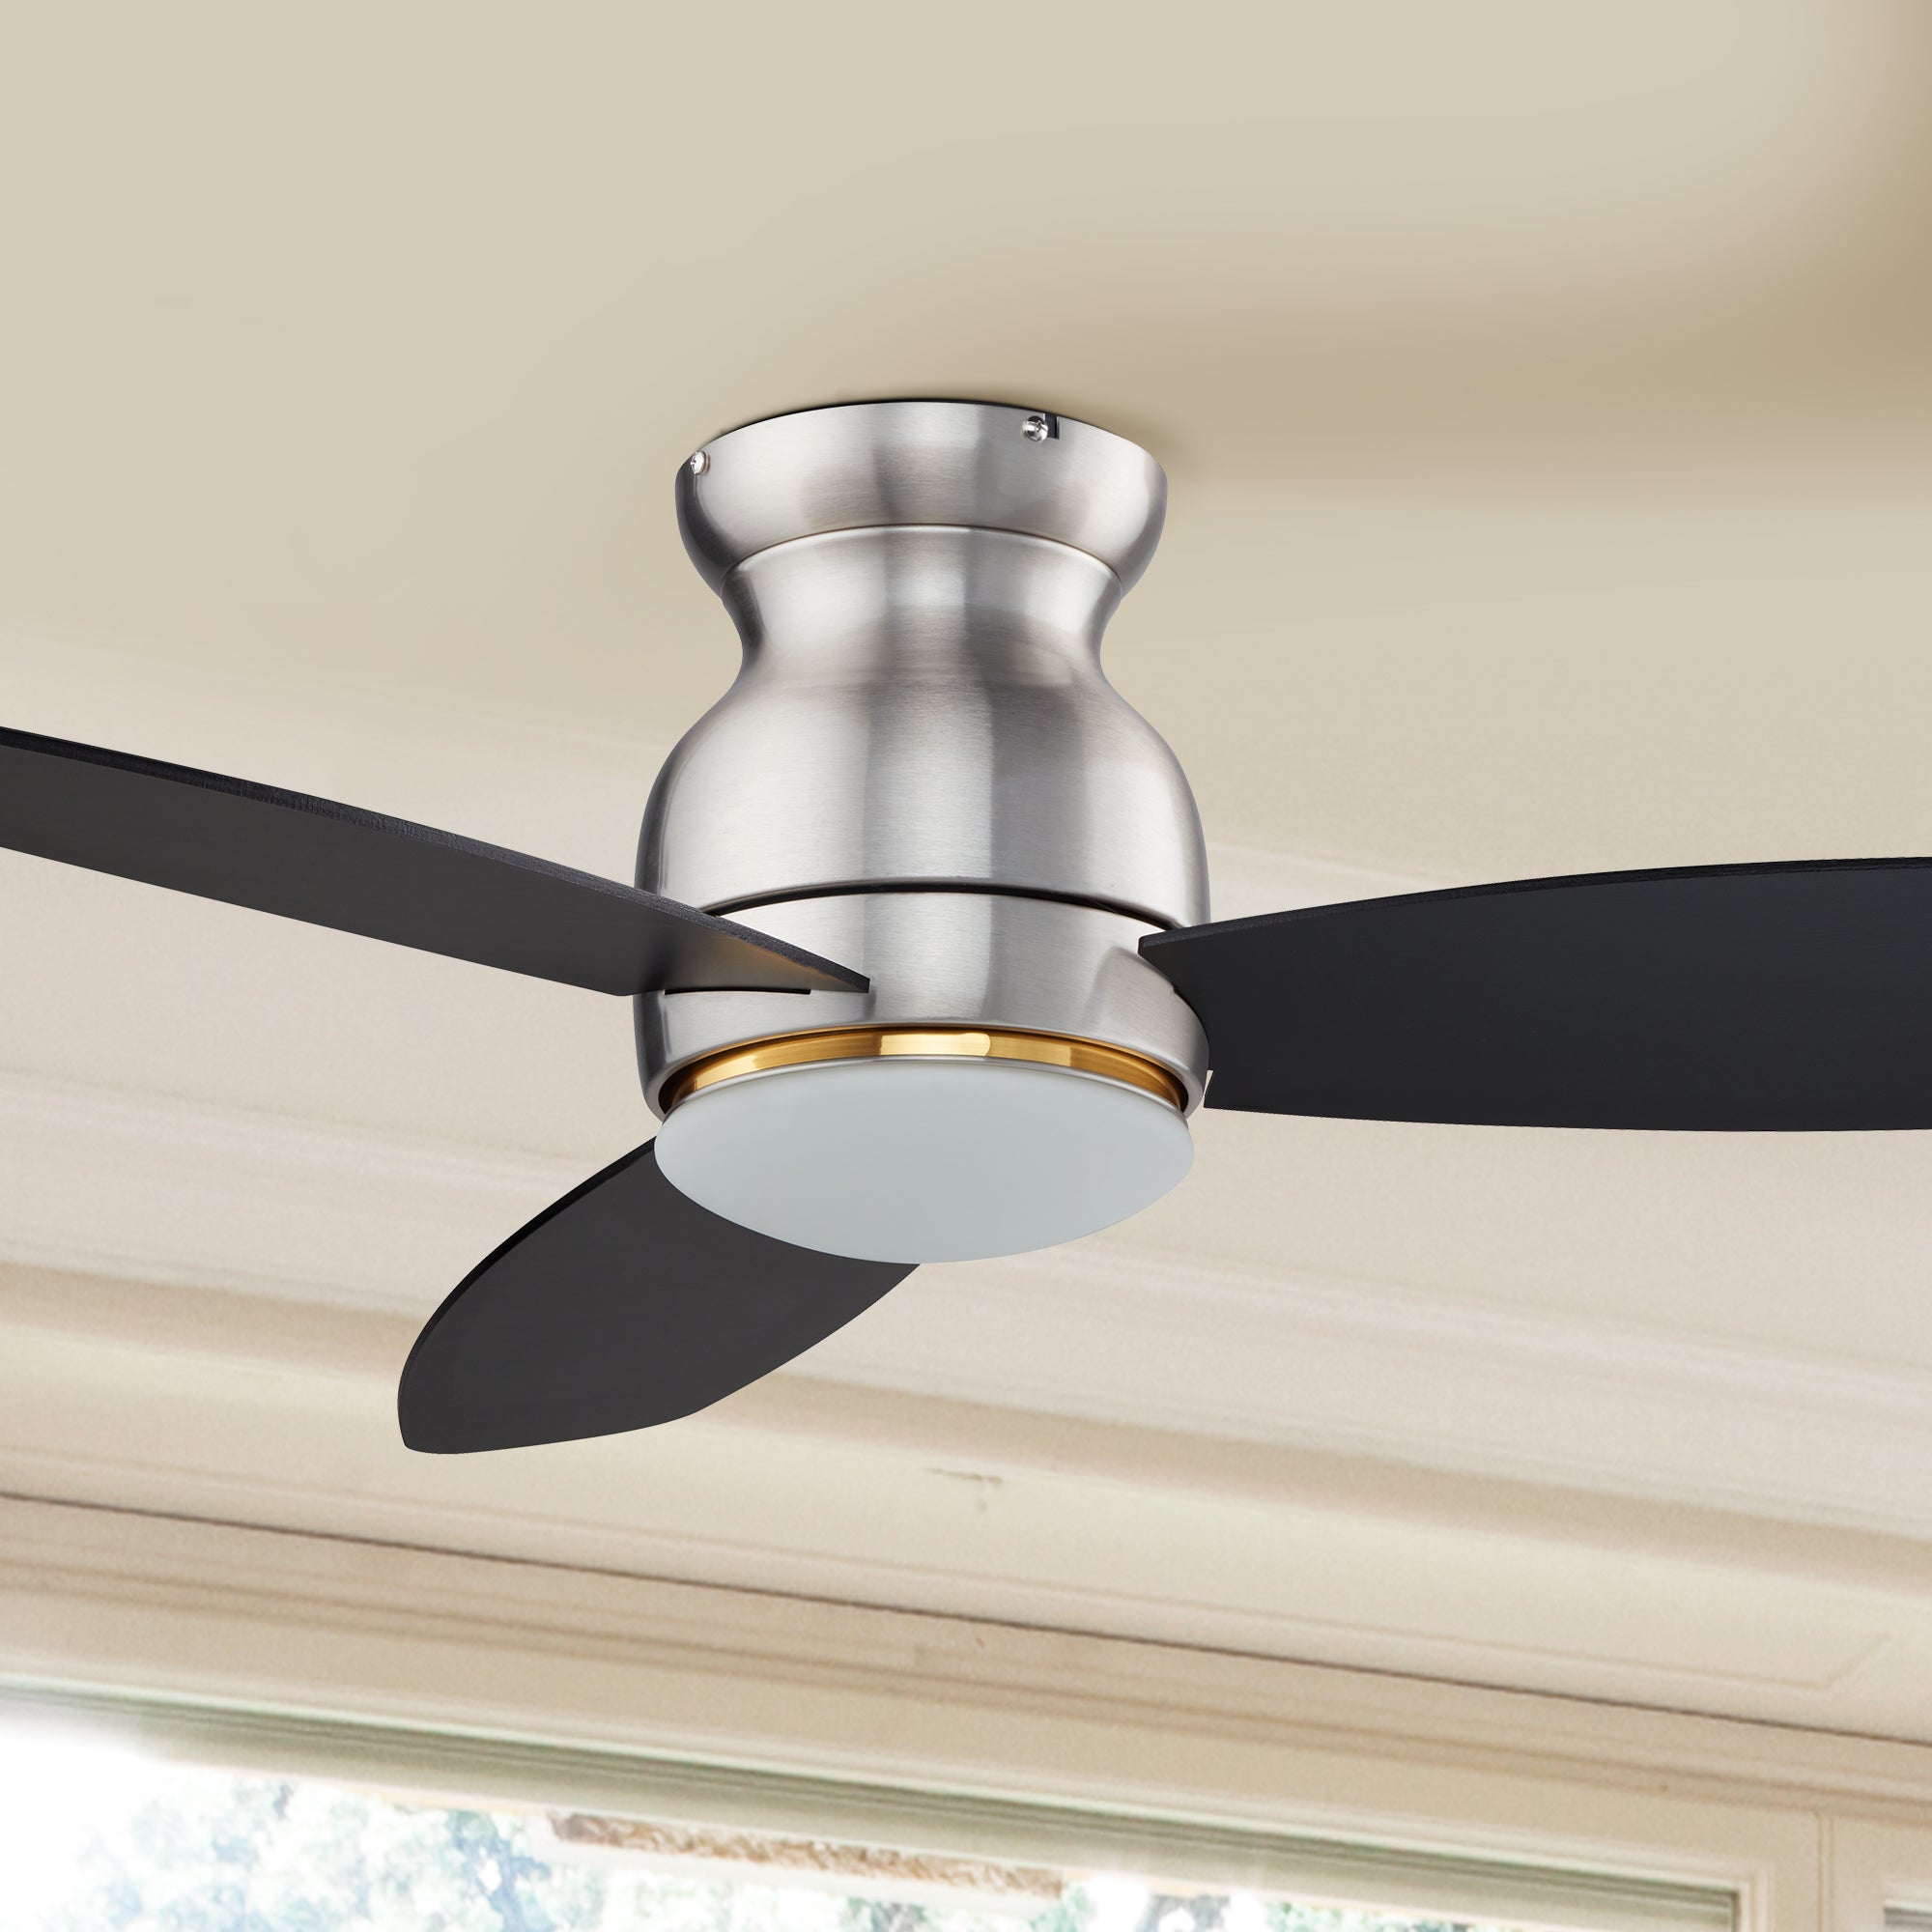 Smafan 48 inch Trendsetter smart ceiling fan designed with Black finish, elegant Plywood blades and integrated 4000K LED daylight.